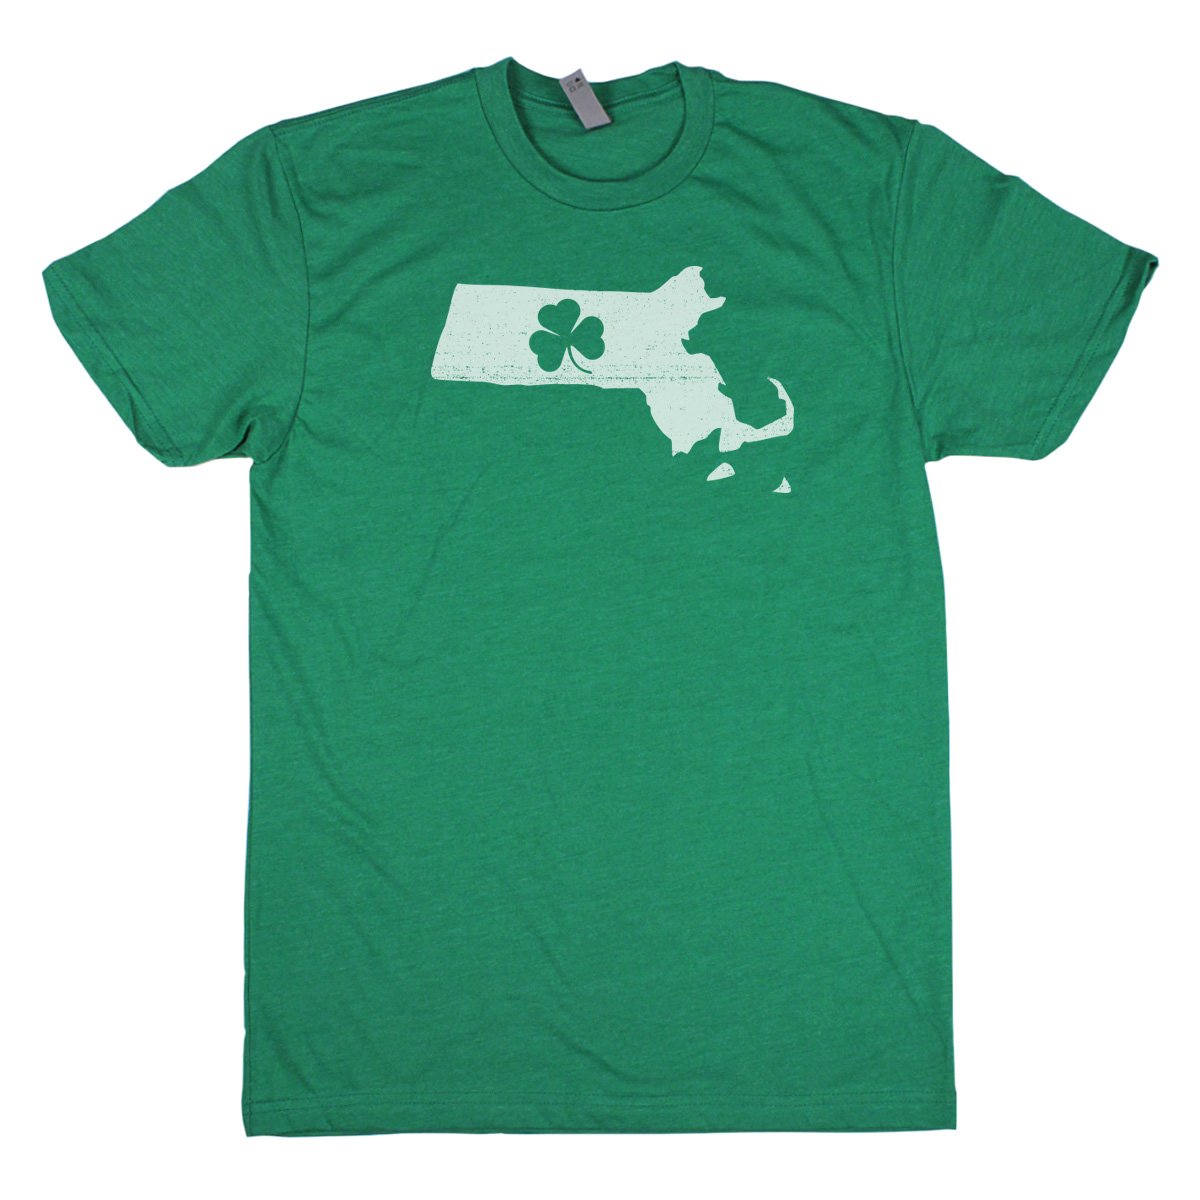 Shamrock Men's Unisex T-Shirt - North Dakota